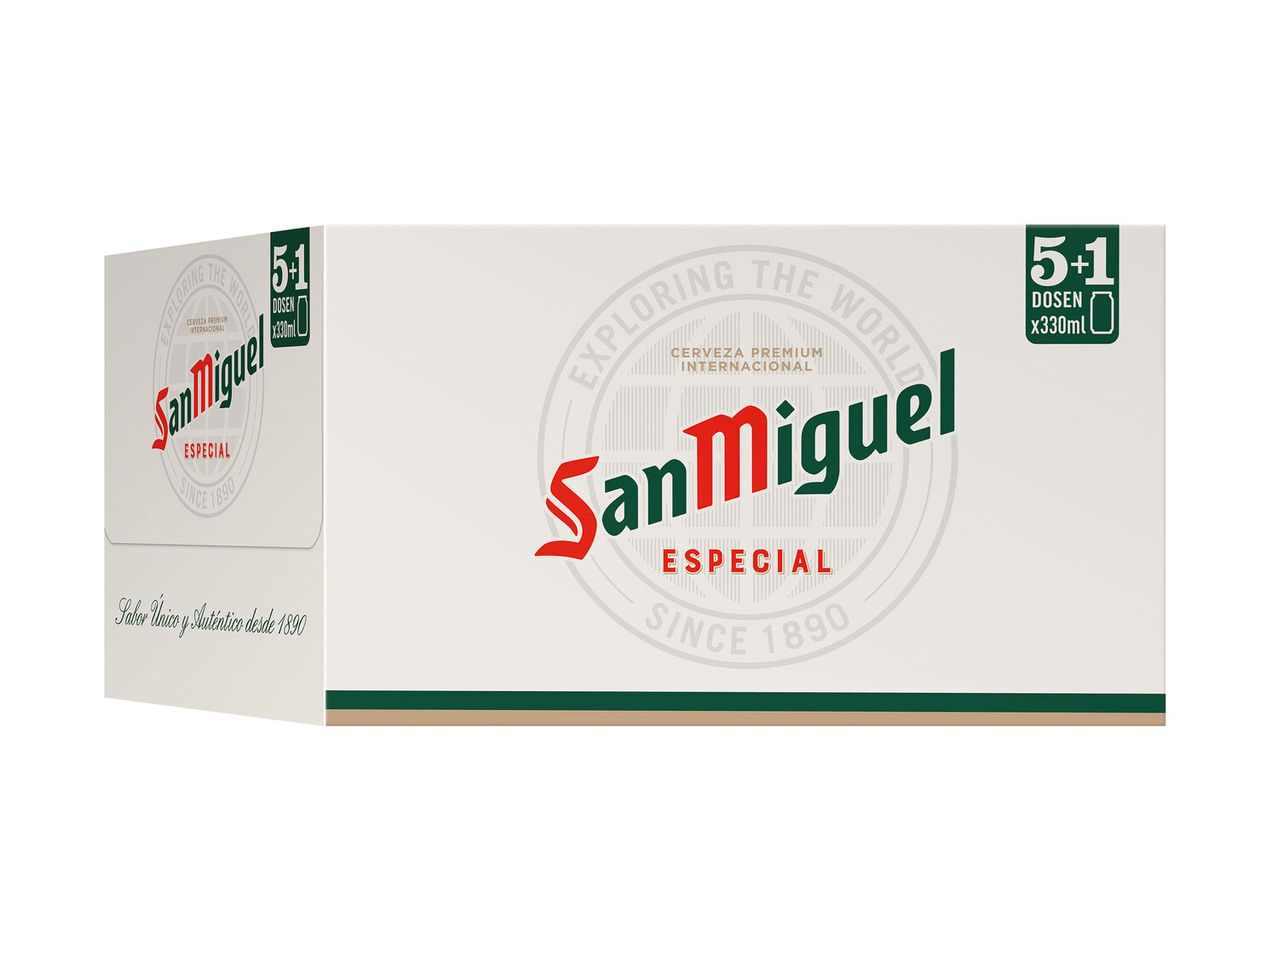 Niedrigster Preis im Land! San Miguel Bier